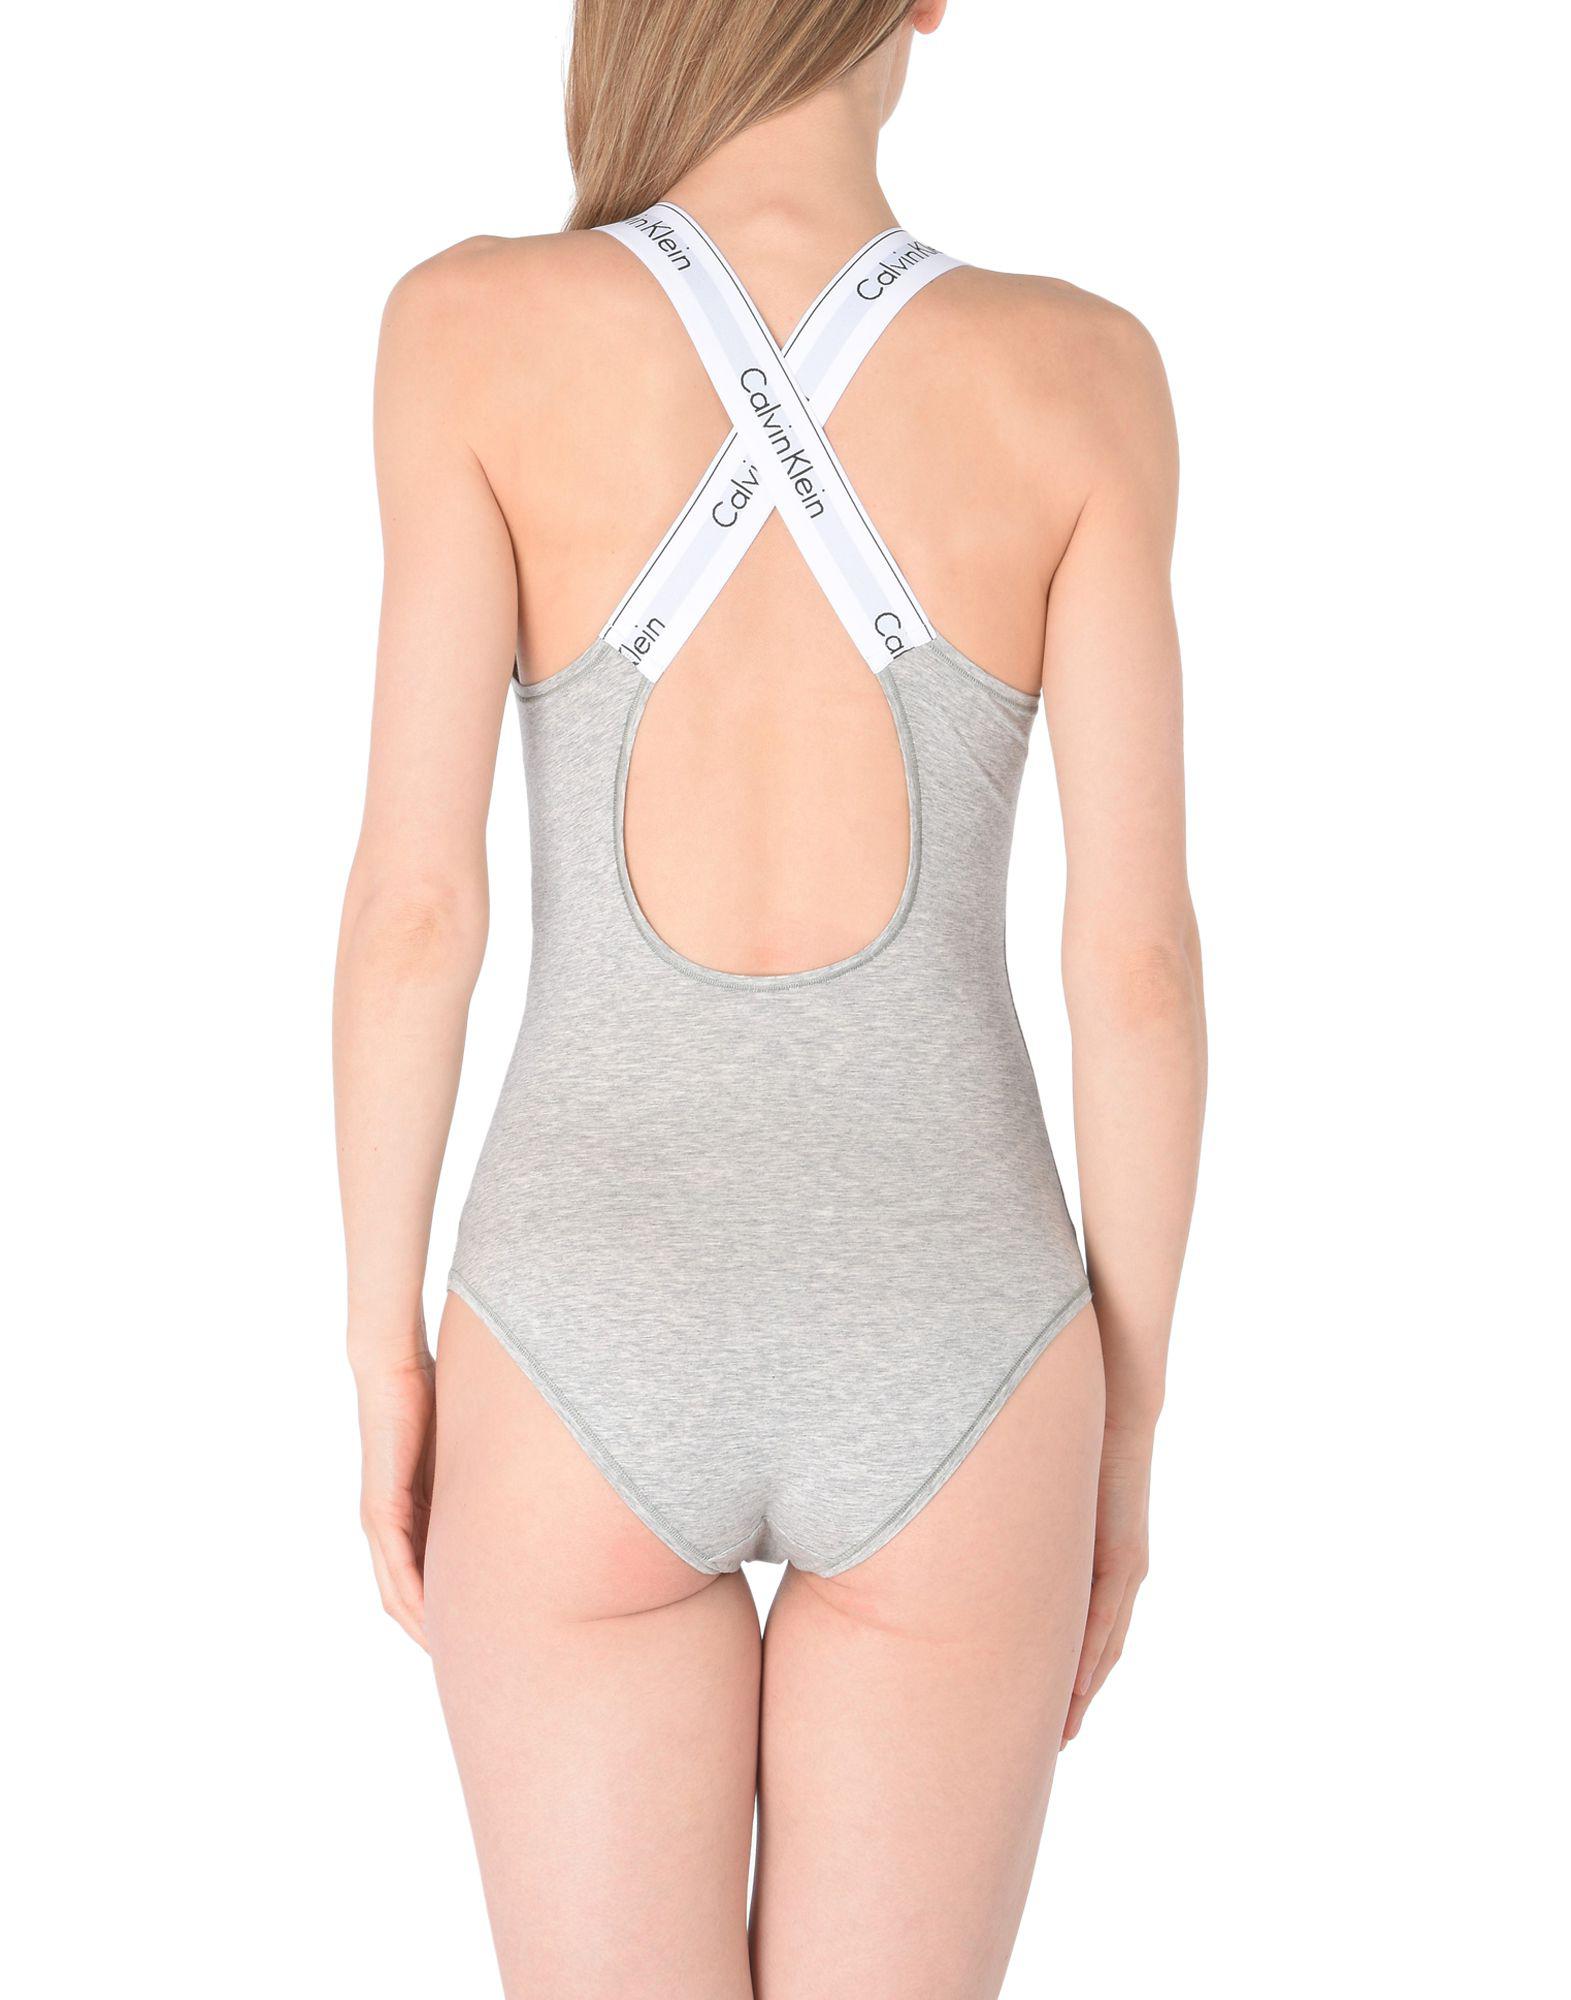 Calvin Klein Grey Bodysuit Flash Sales, 52% OFF | www.colegiogamarra.com